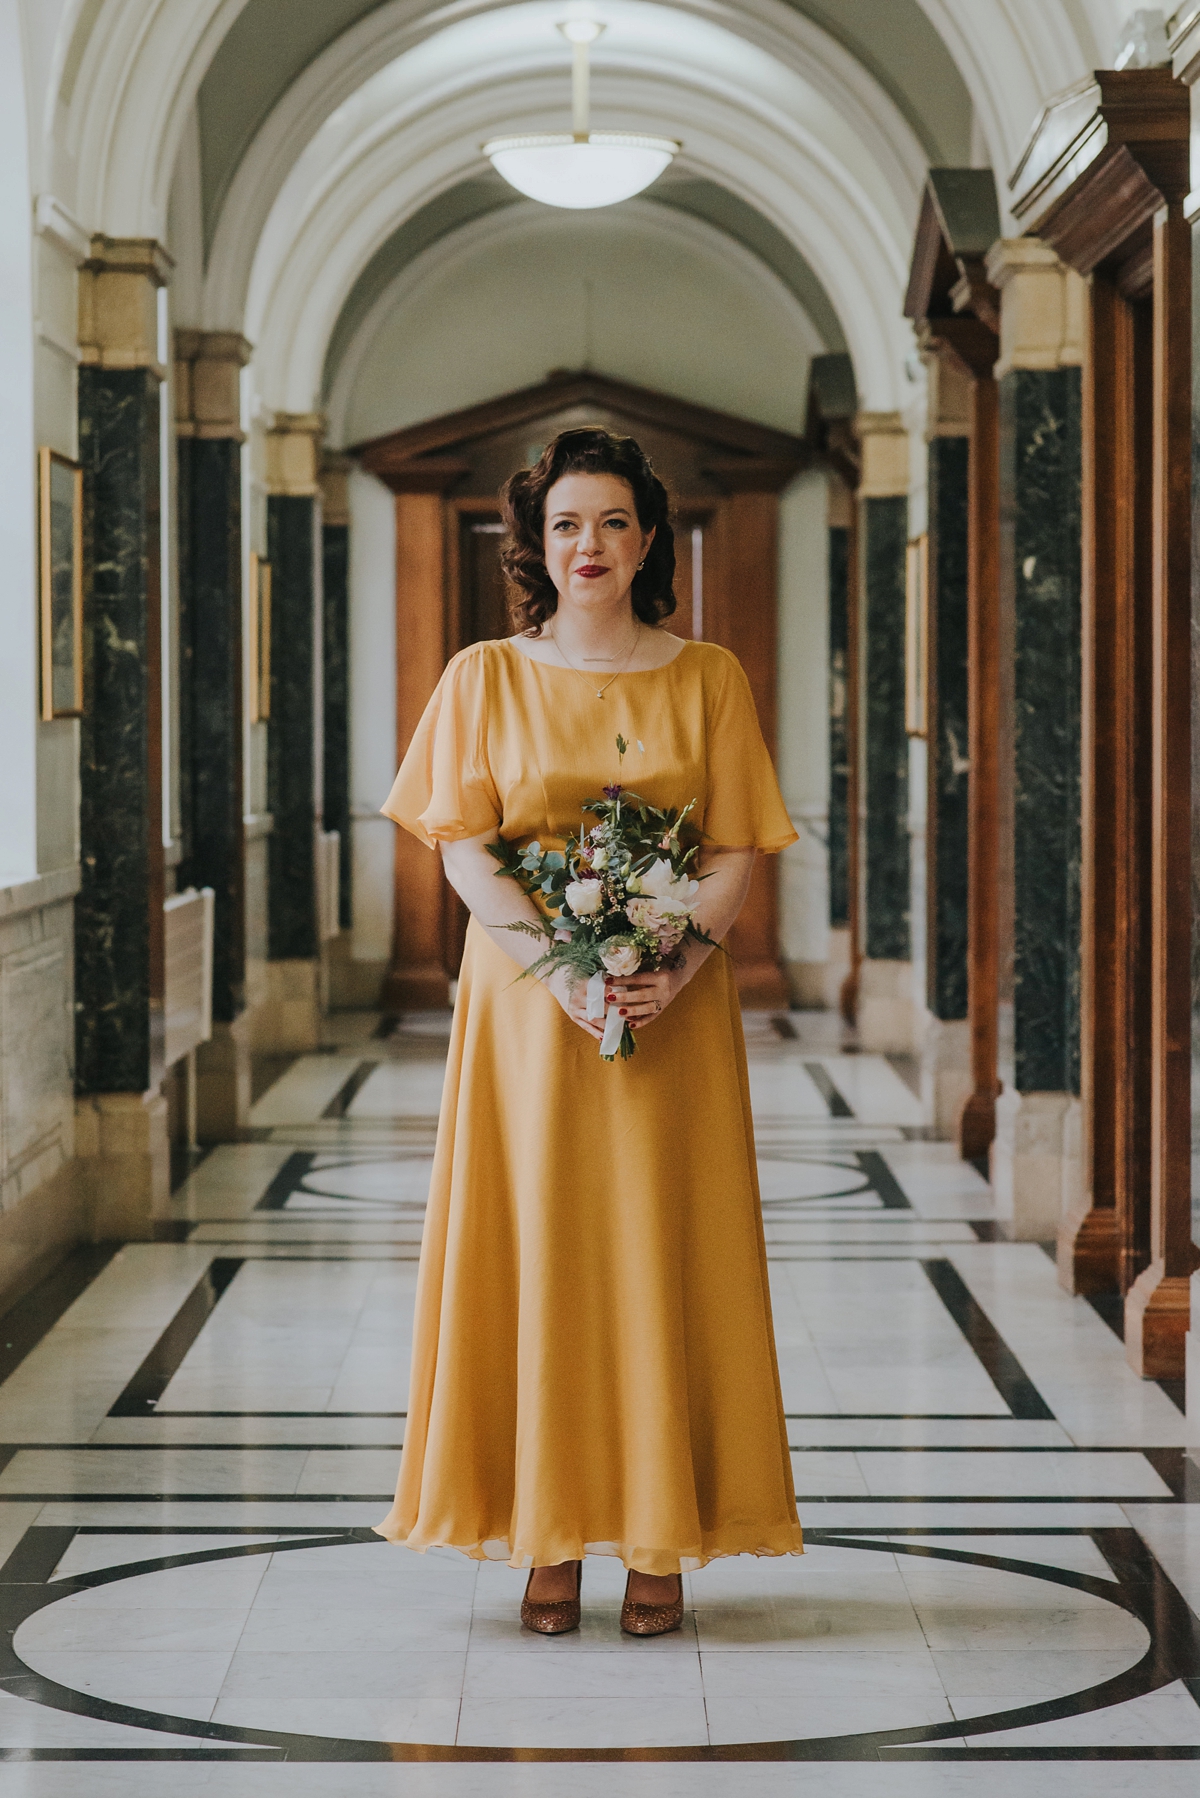 21 A yellow dress for a modern London pub wedding